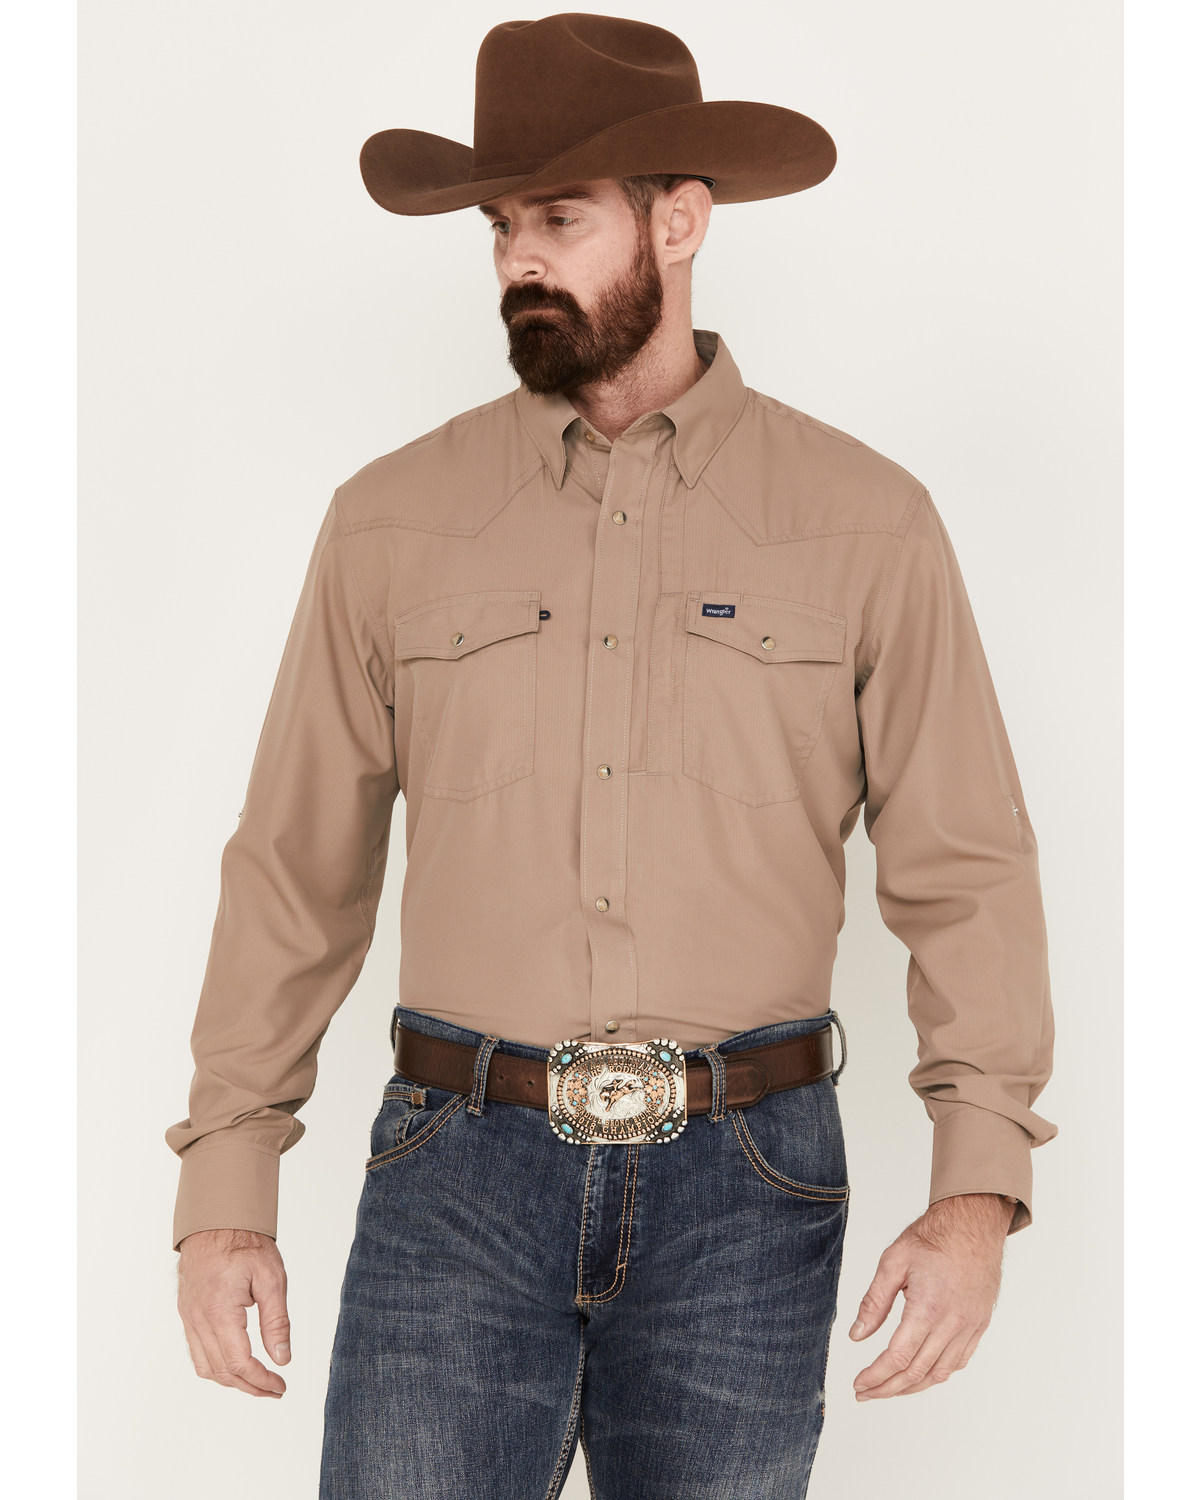 Wrangler Men's Performance Long Sleeve Snap Western Shirt - Big & Tall